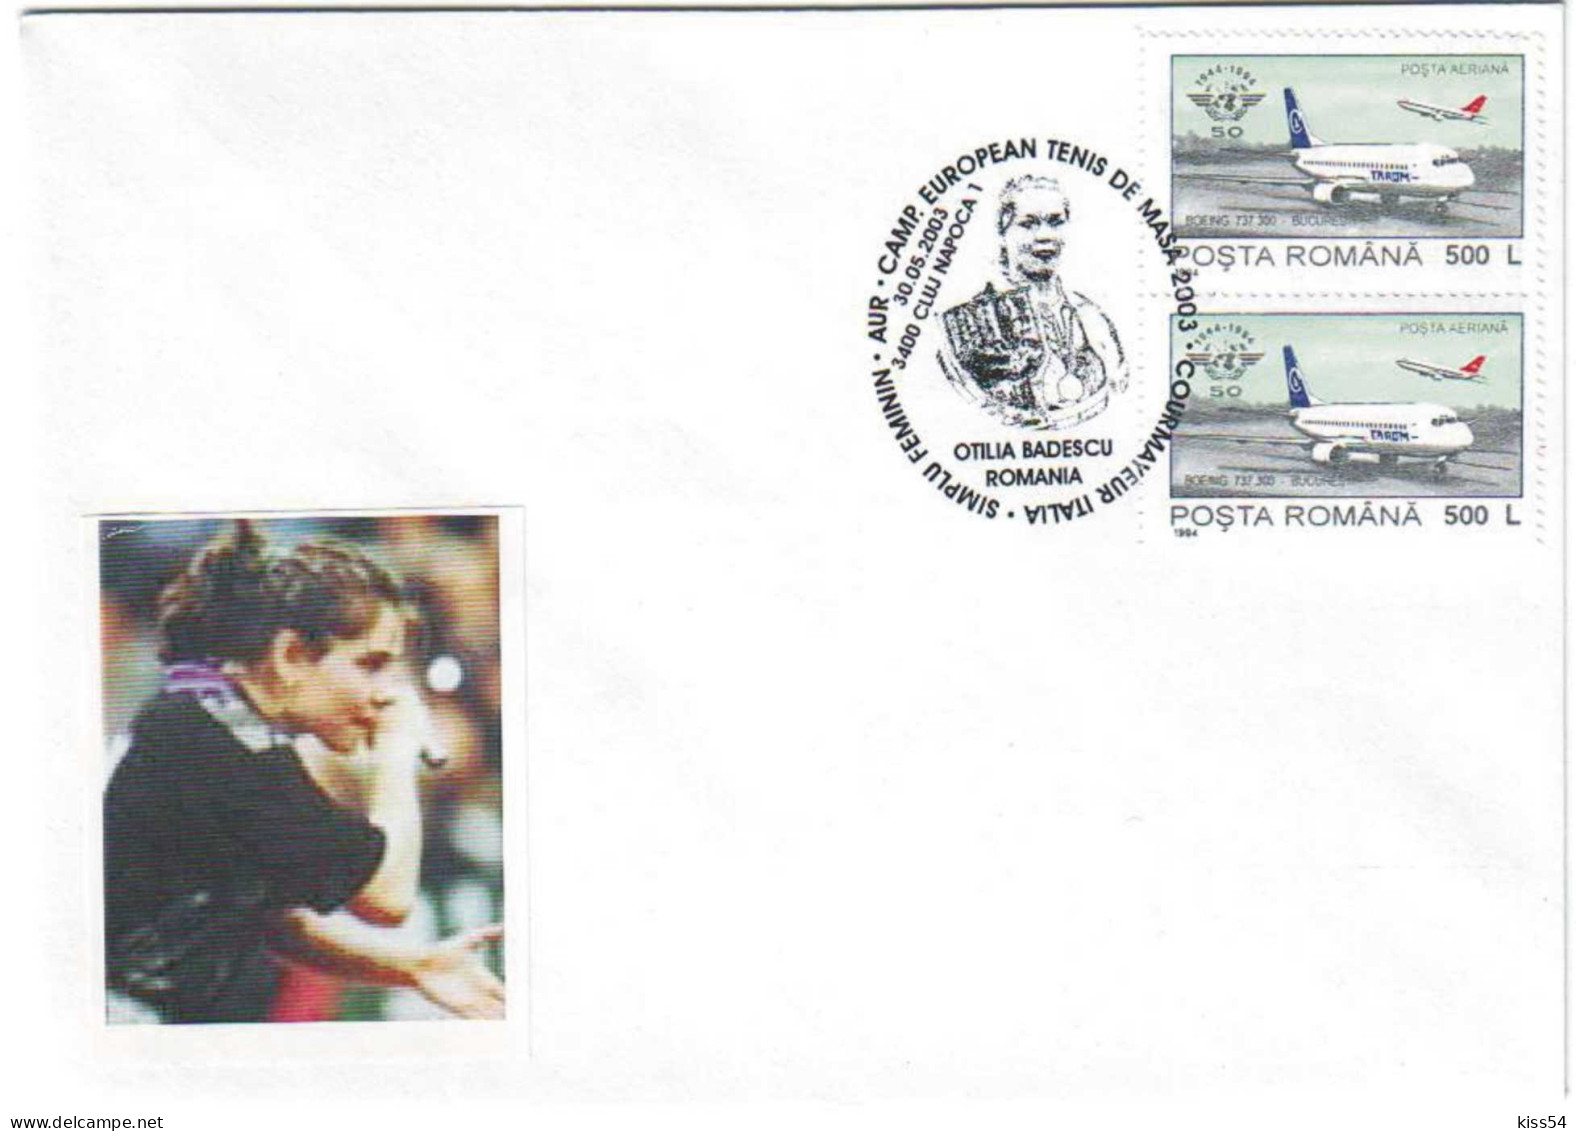 COV 95 - 272 European Women's Table Tennis Championship ITALY, Romania - Cover - Used - 2003 - Storia Postale